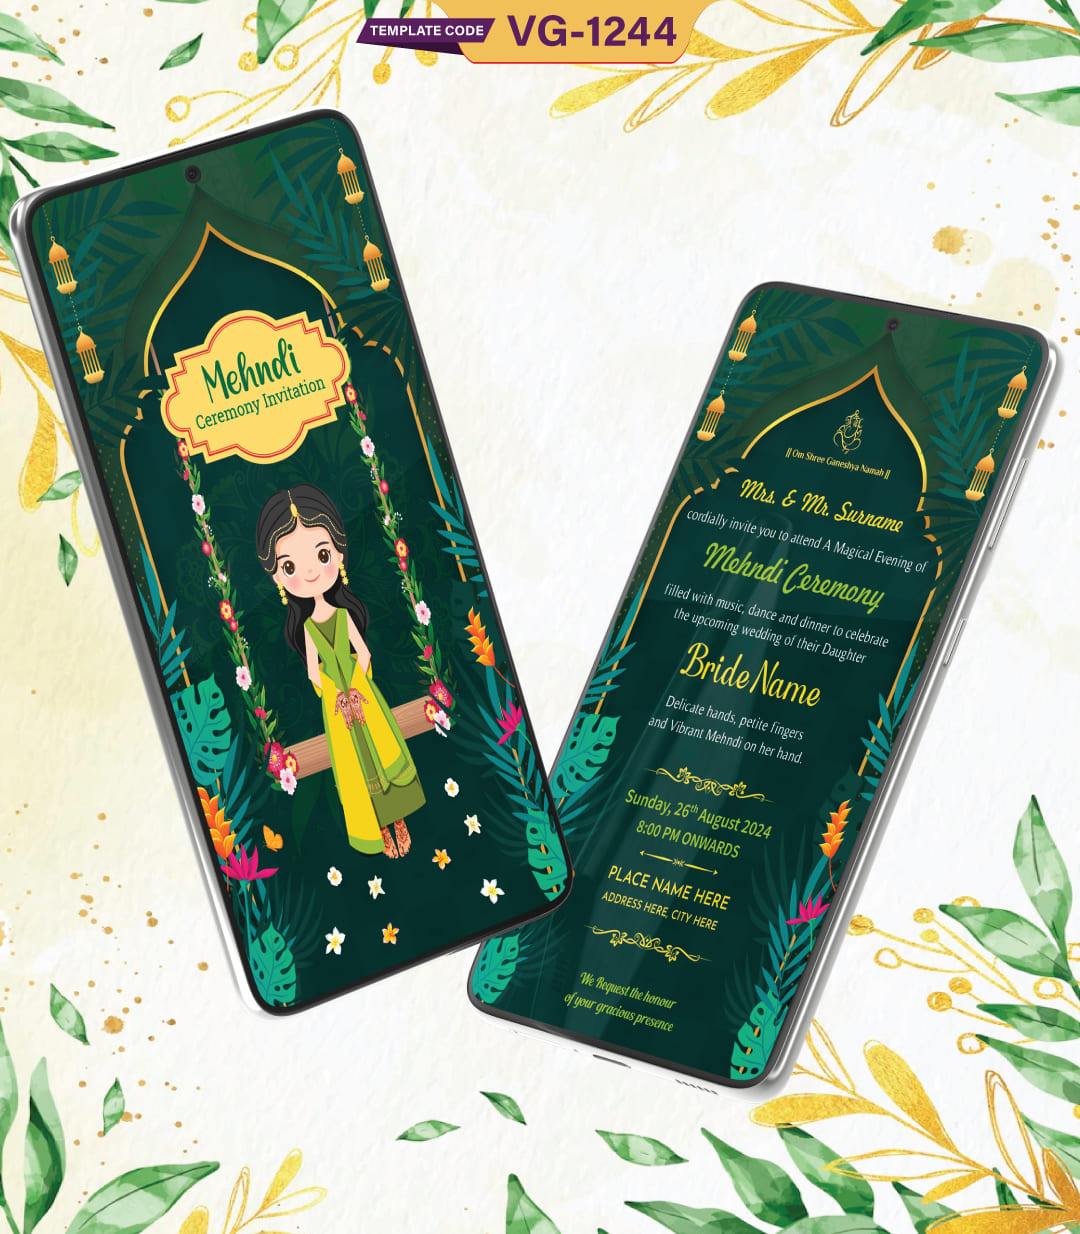 Cartoon Mehndi Ceremony Invitation Card - Custom Mehndi Invitation Card